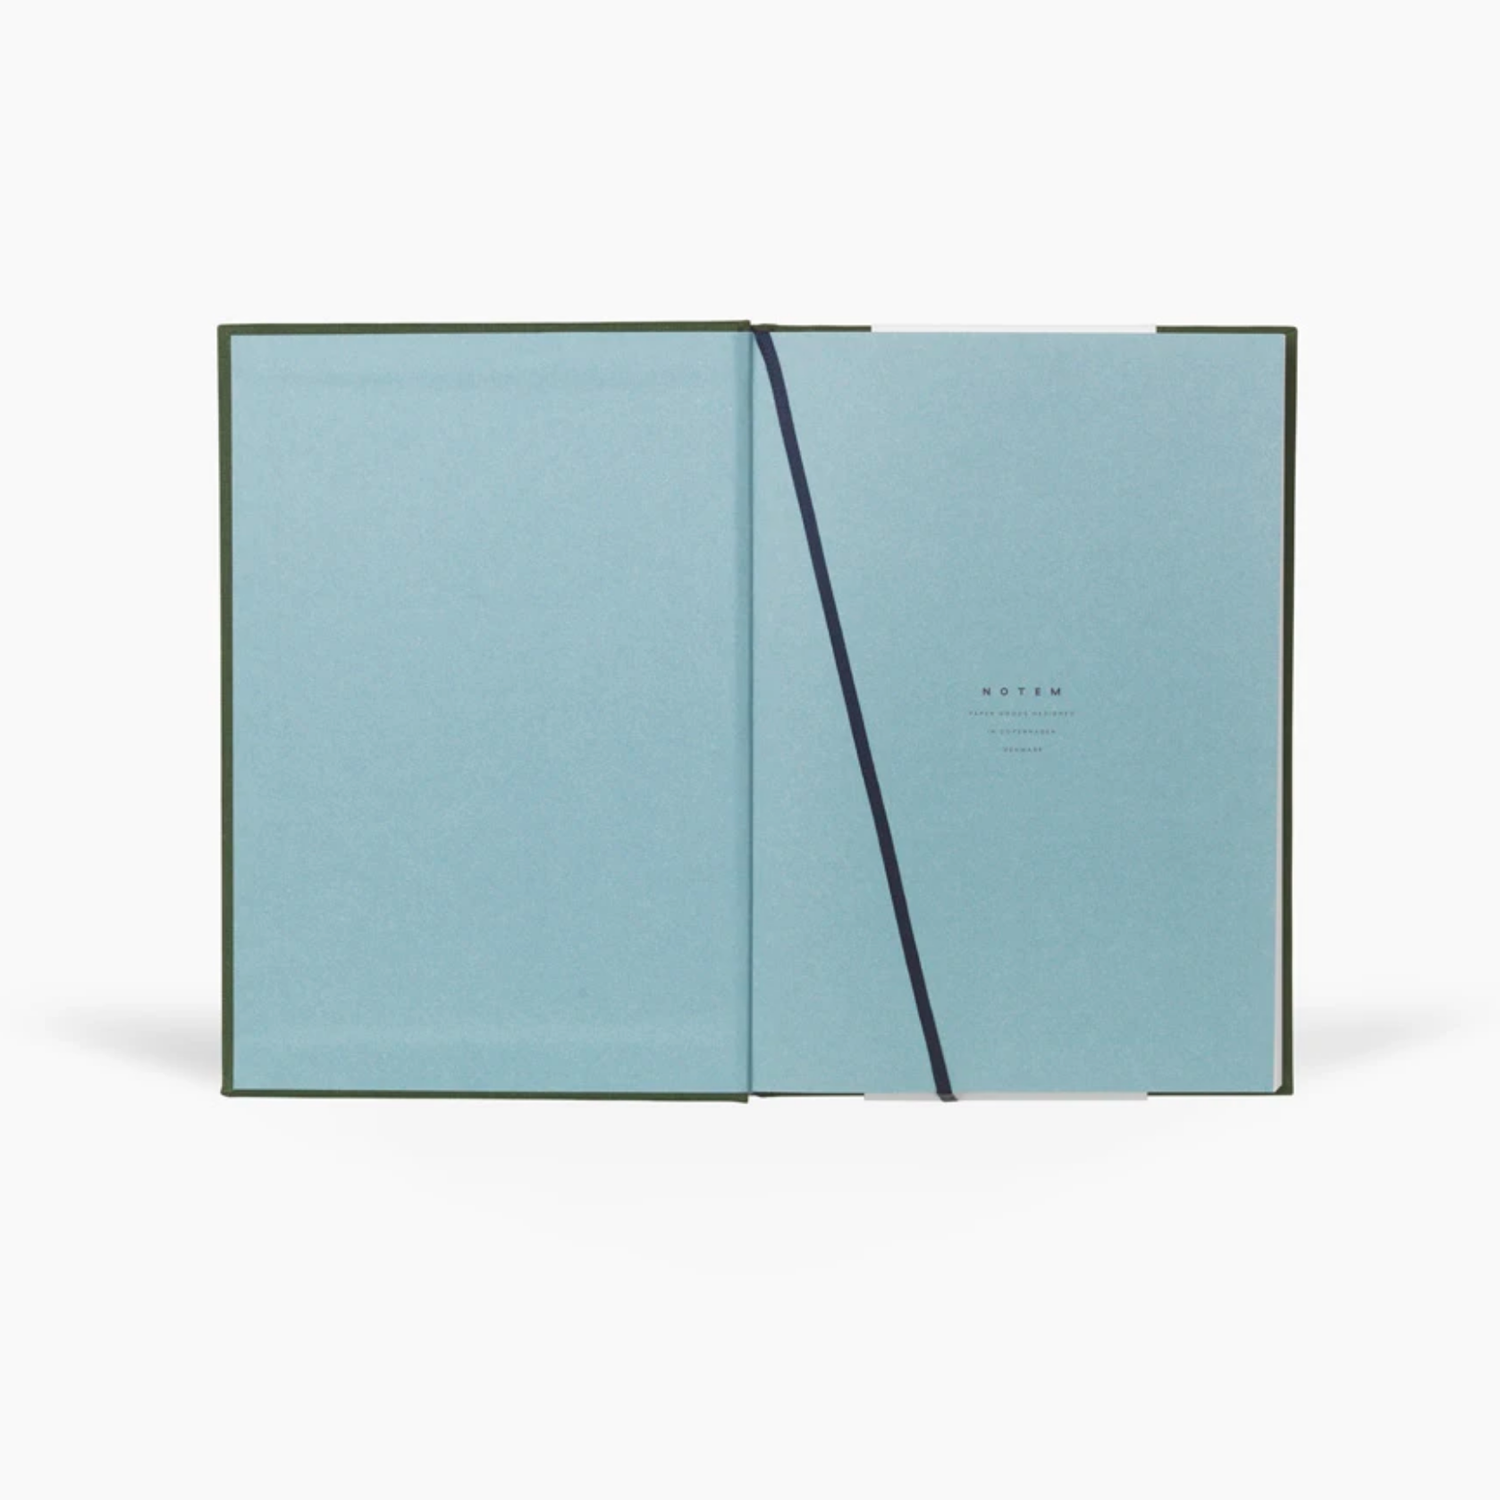 EVEN Forest Green Hardcover Notebook - Medium